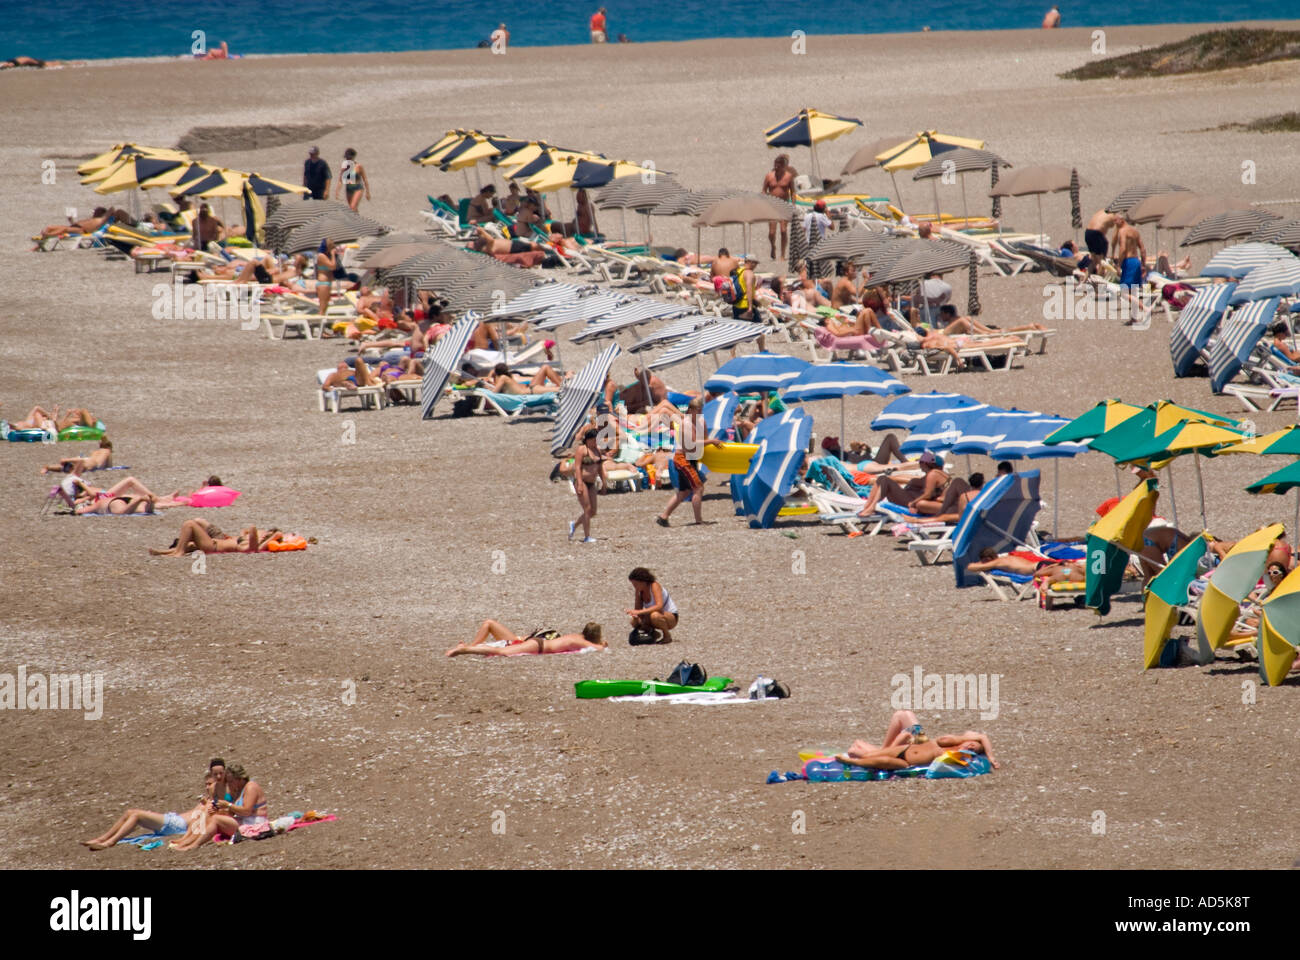 Horizontal aerial view of people enjoying themselves sunbathing on the beach. Stock Photo